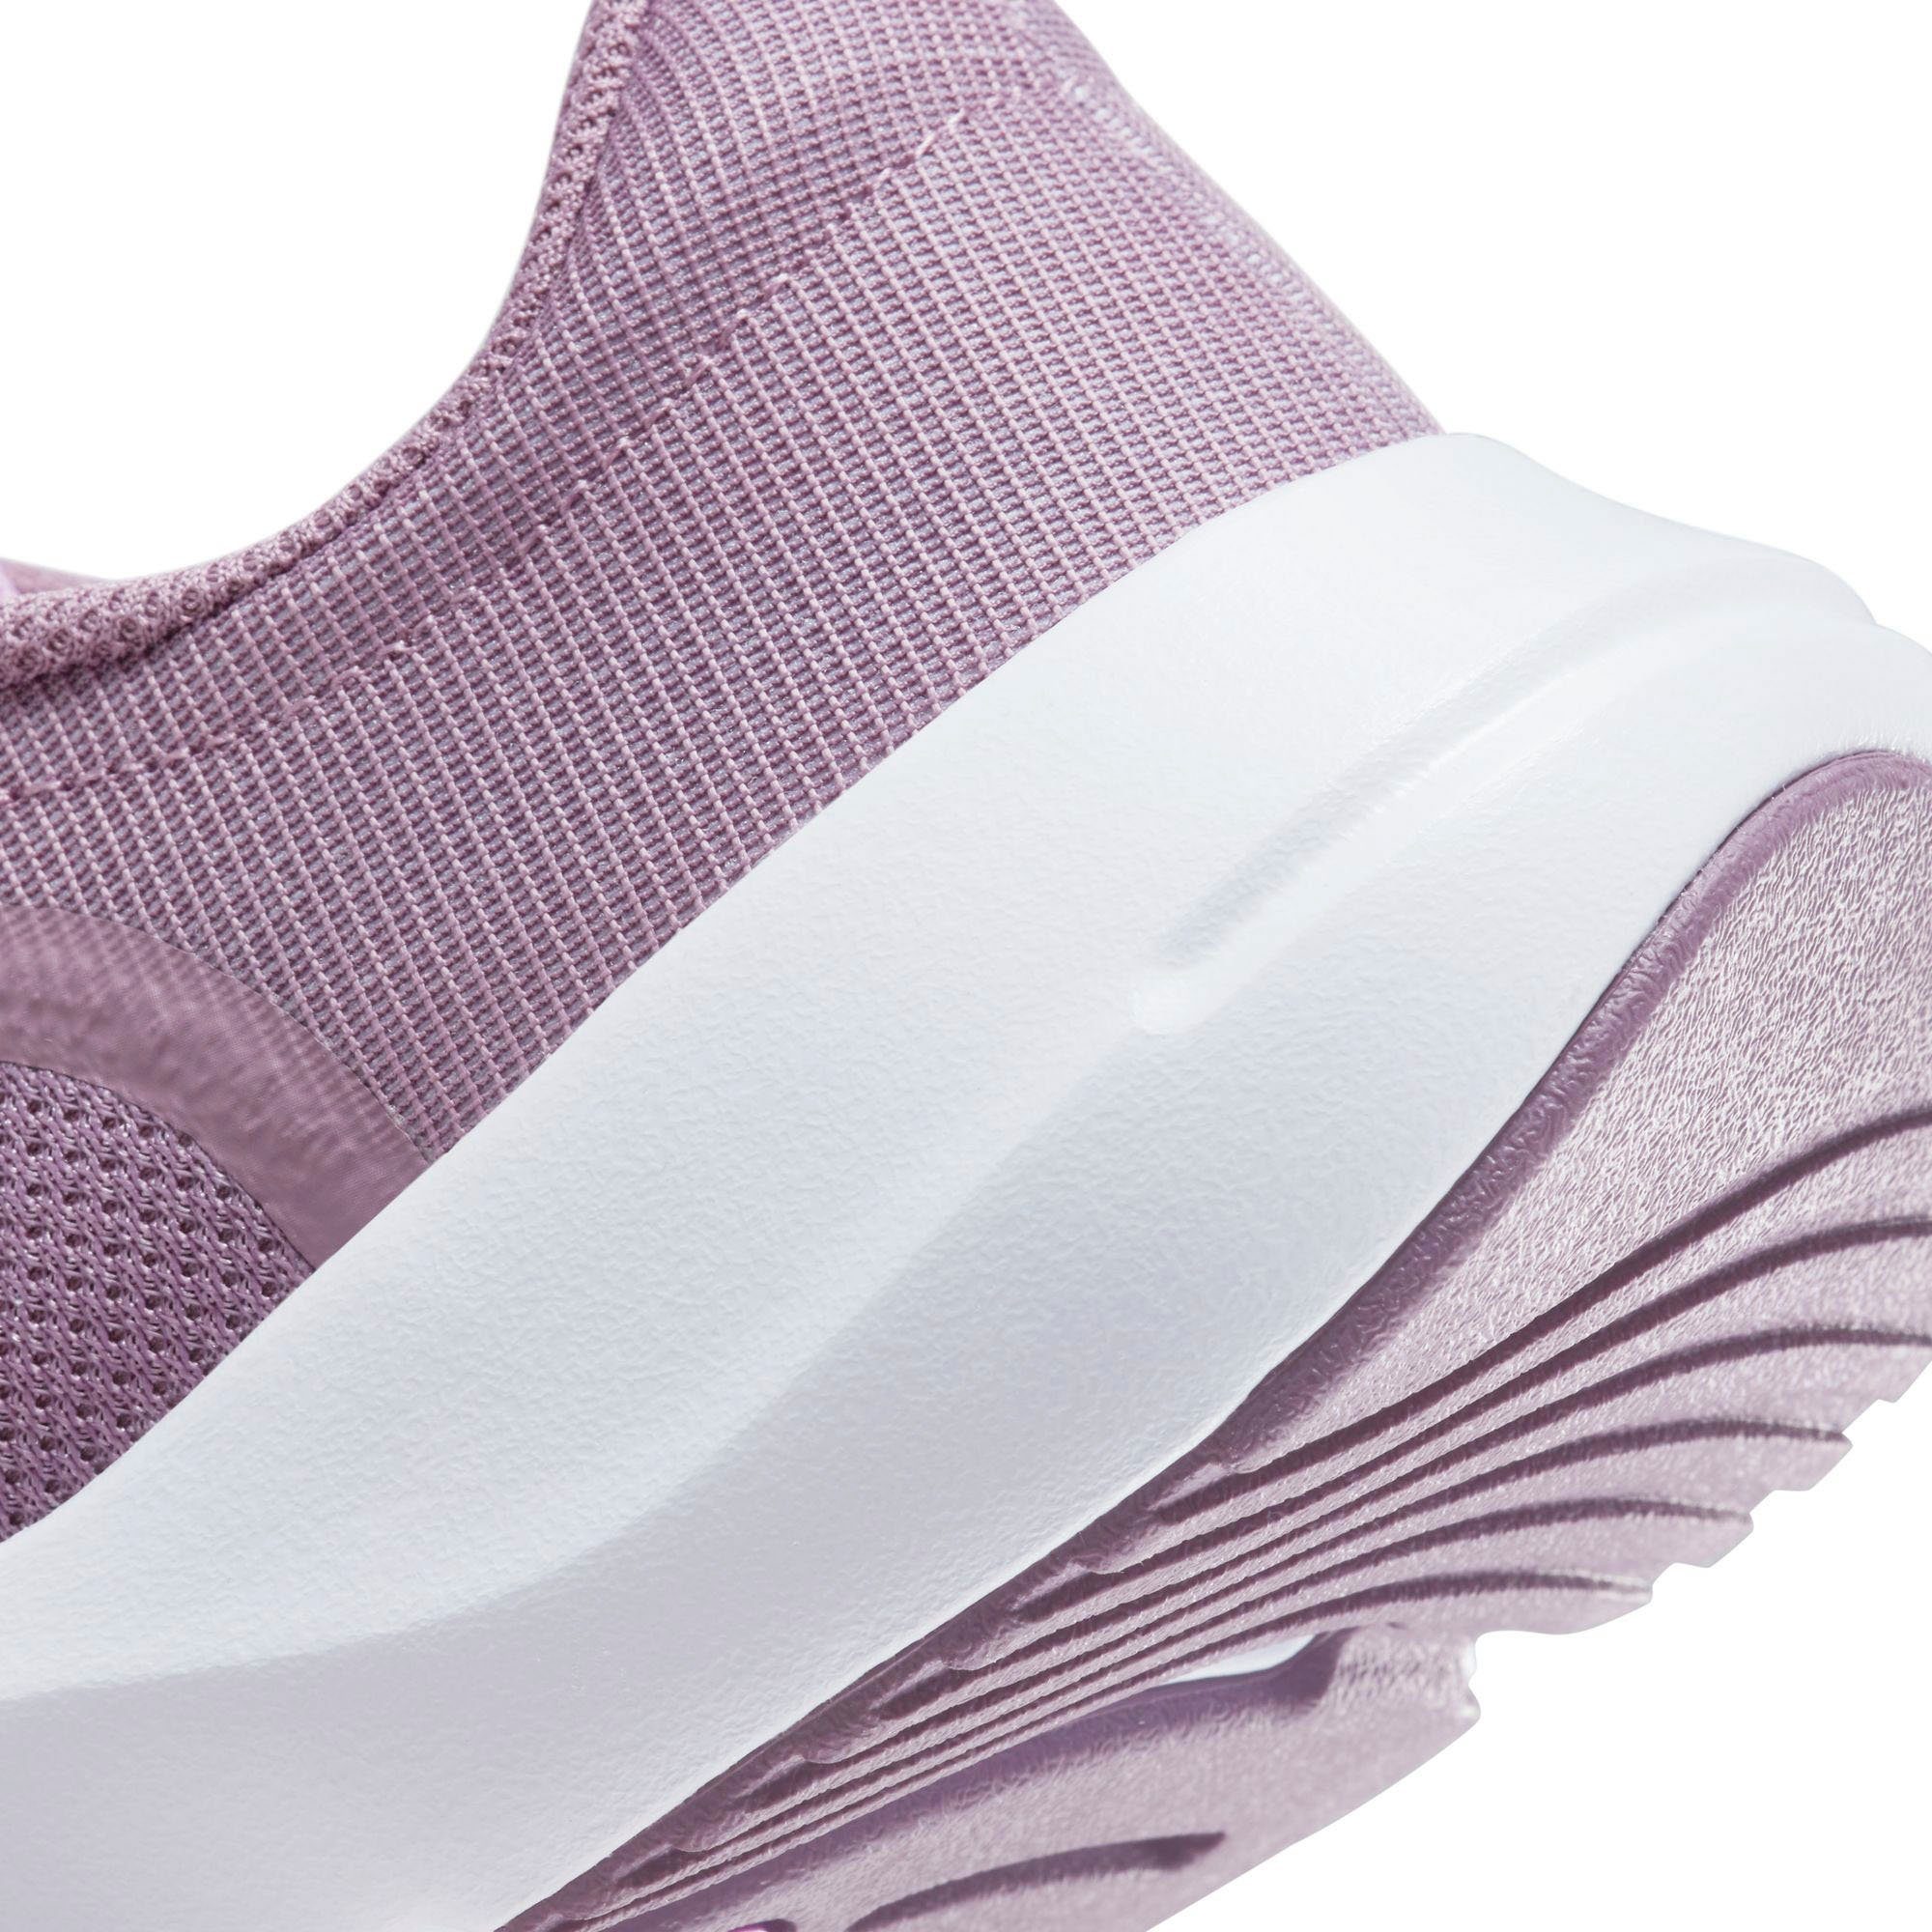 Nike In-Season TR 13 Fitnessschuh violet dust